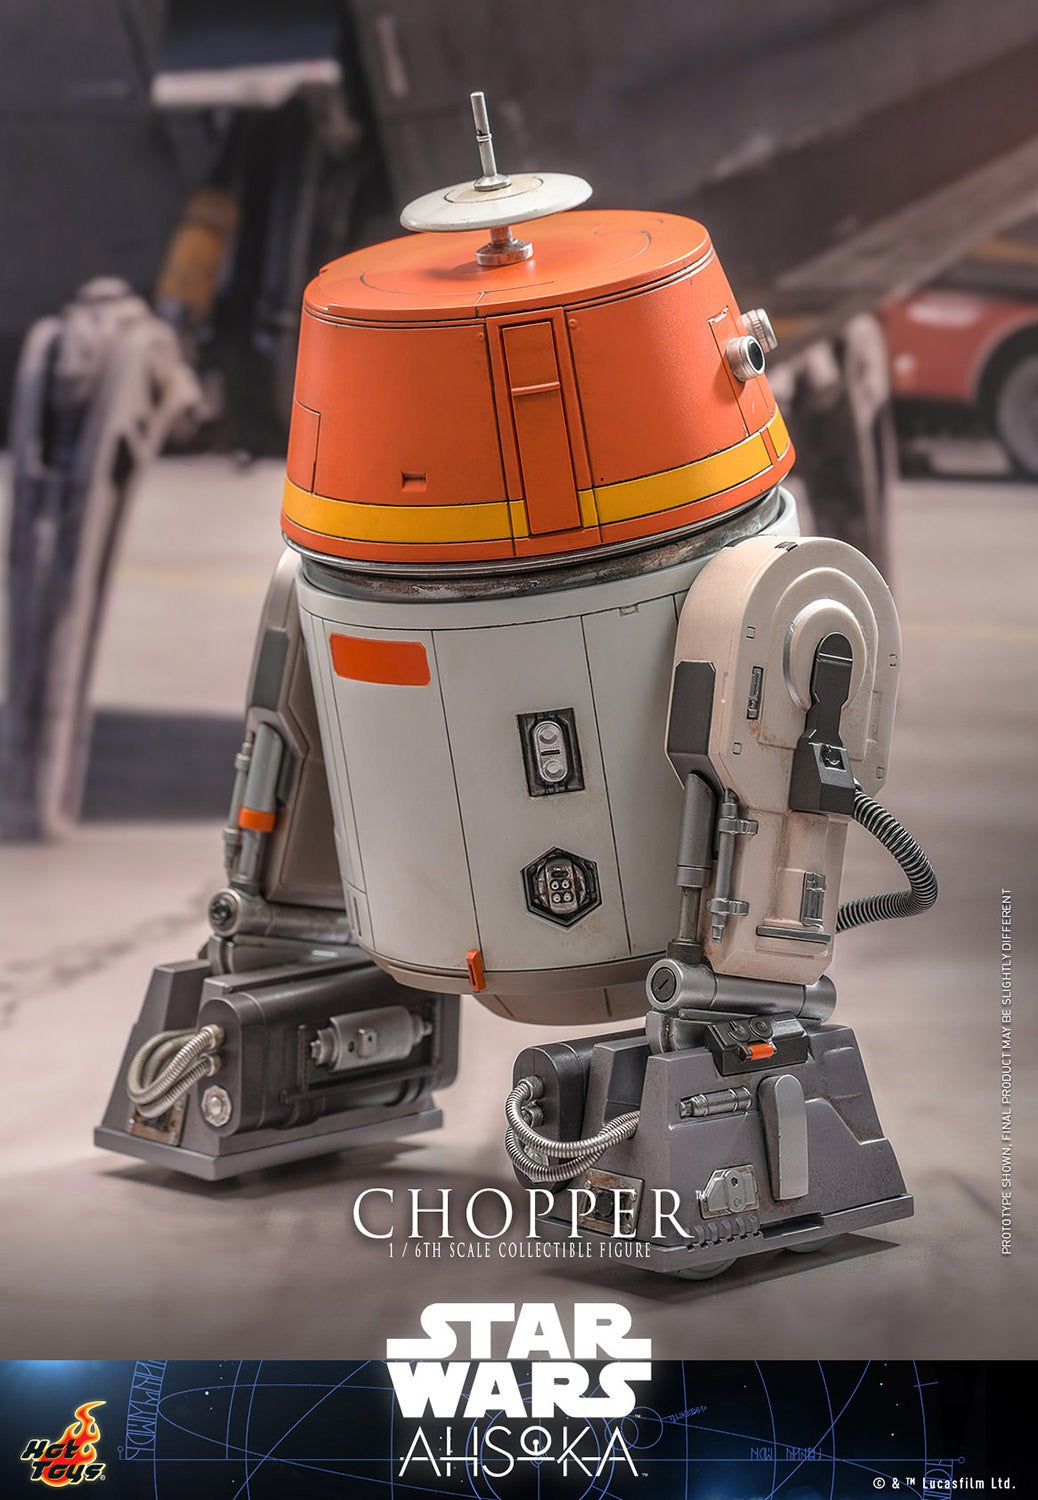 C1-10P: Chopper: Star Wars: Ahsoka: Hot Toys: Hot Toys